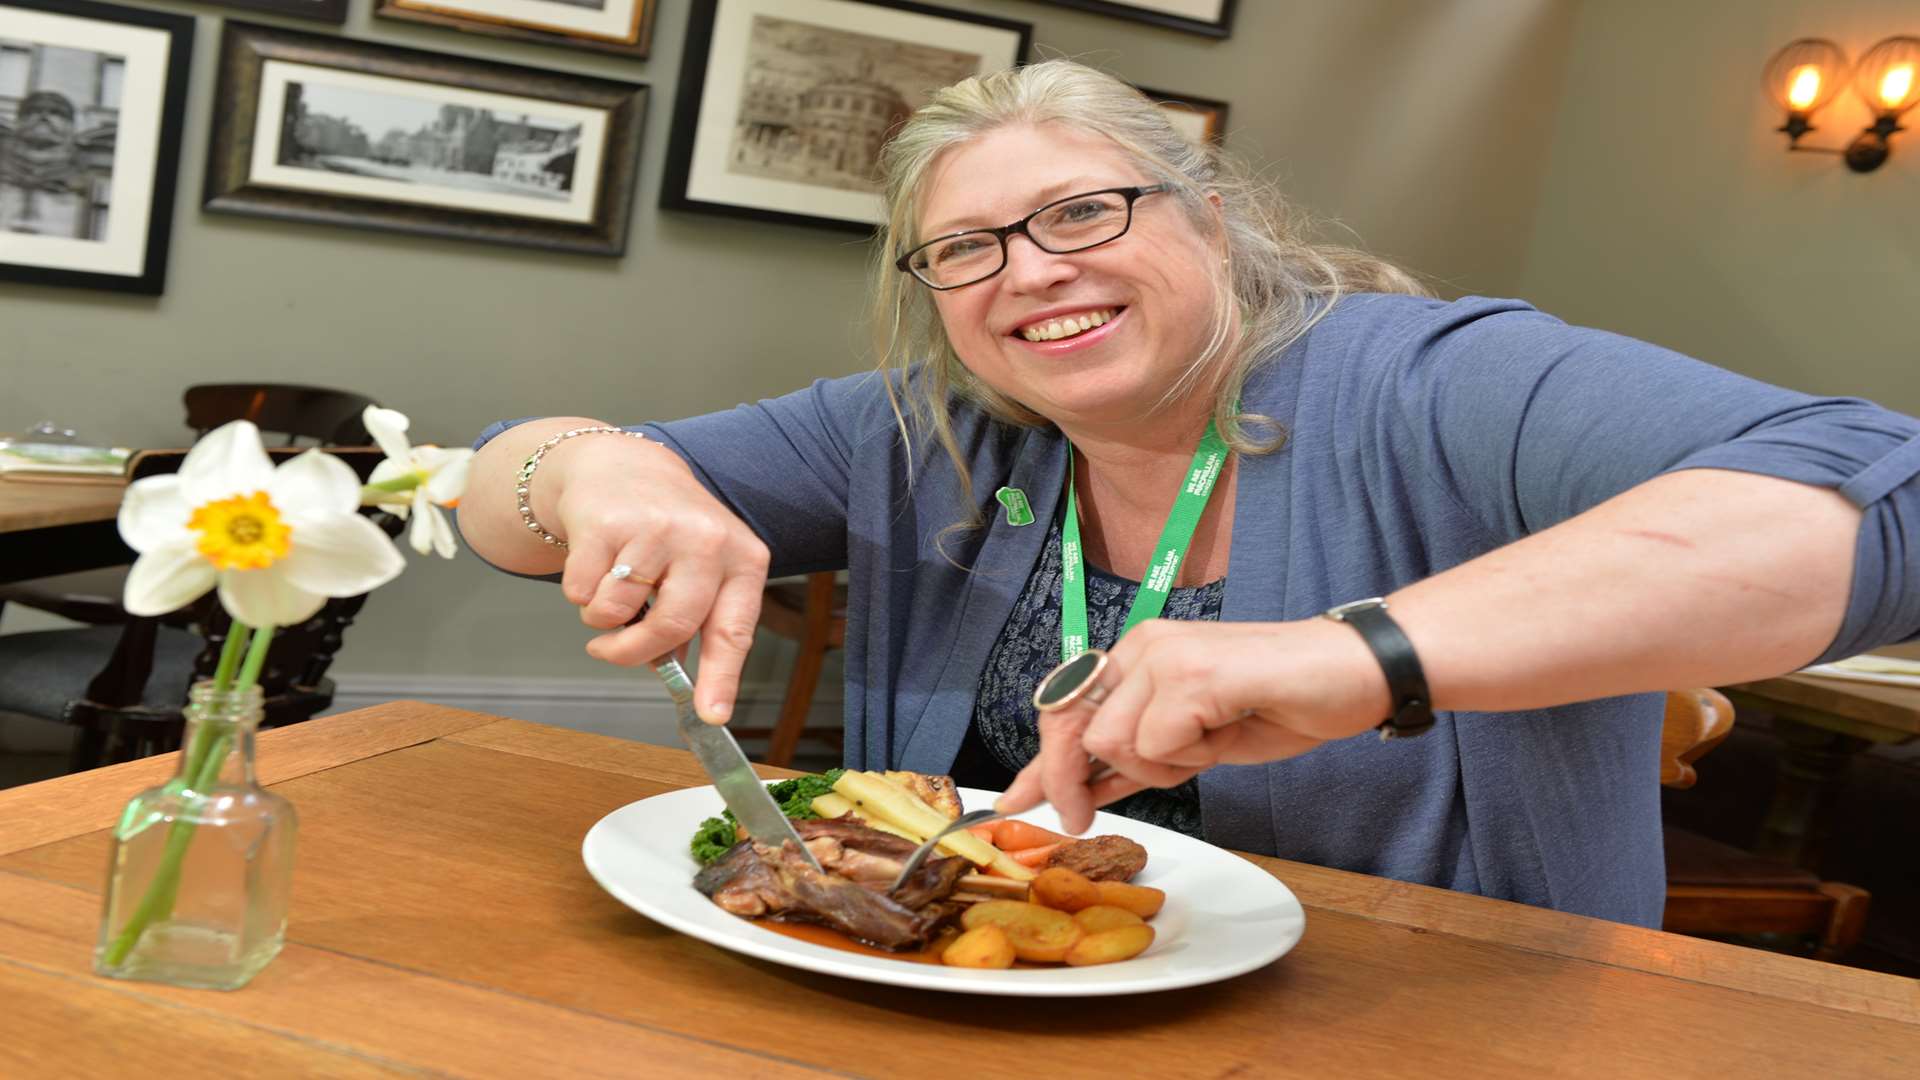 Macmillan nurses are invited to enjoy a free pub roast dinner every Sunday in May